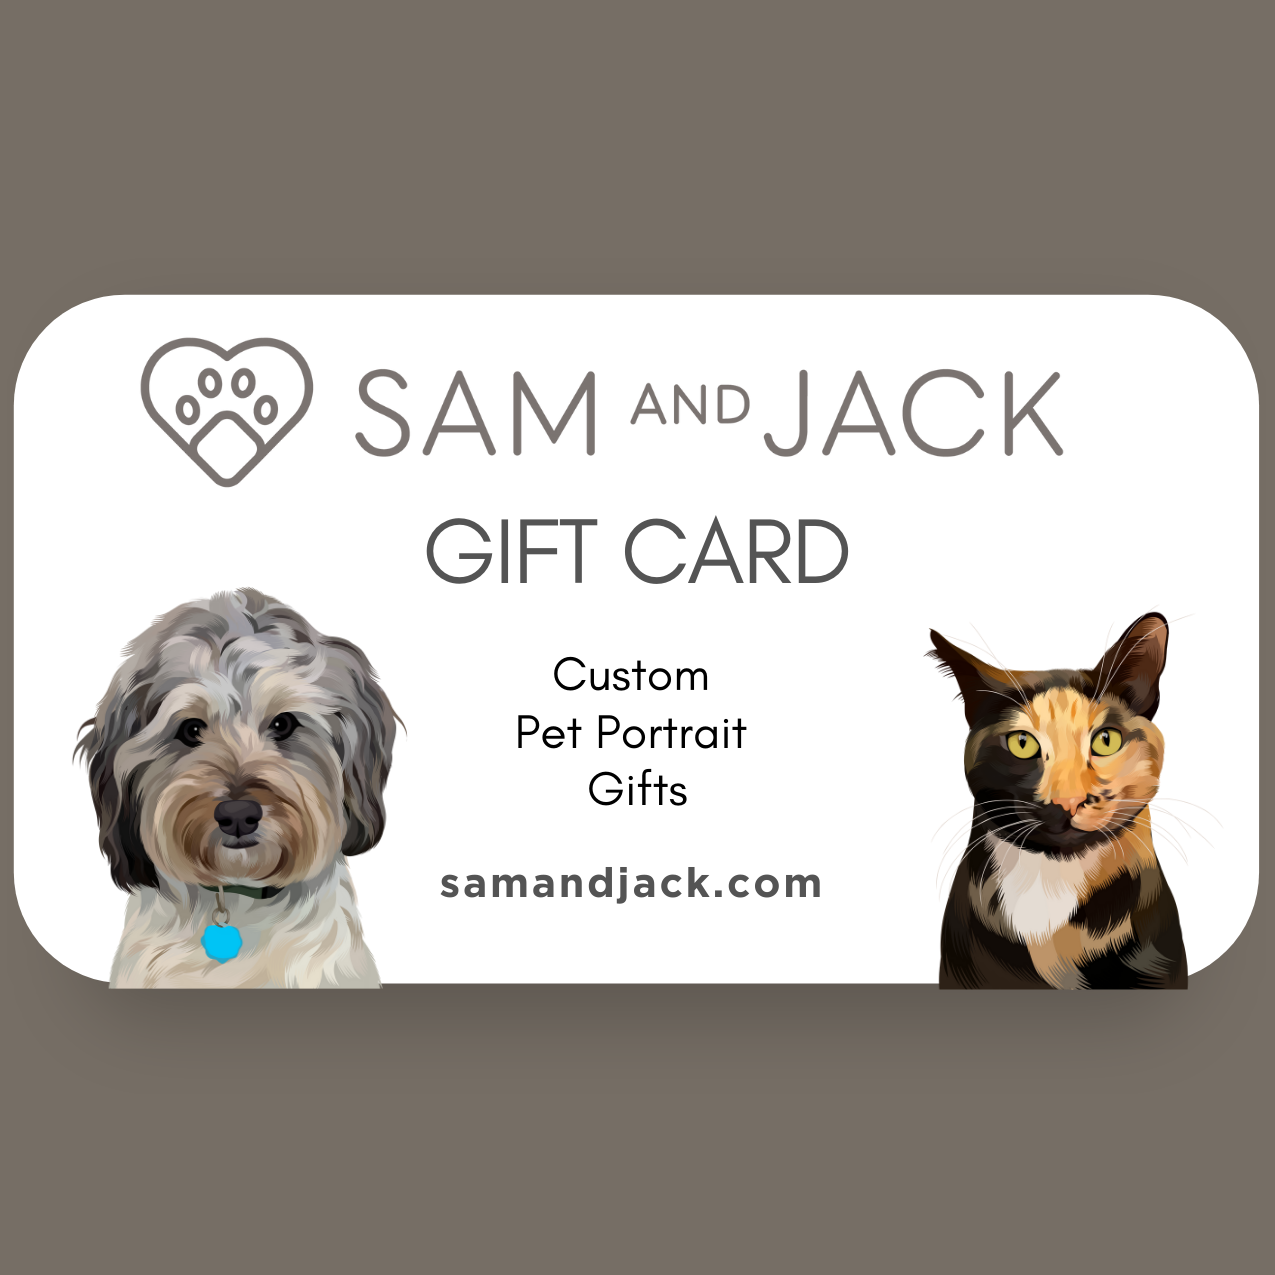 Sam and Jack Gift Card